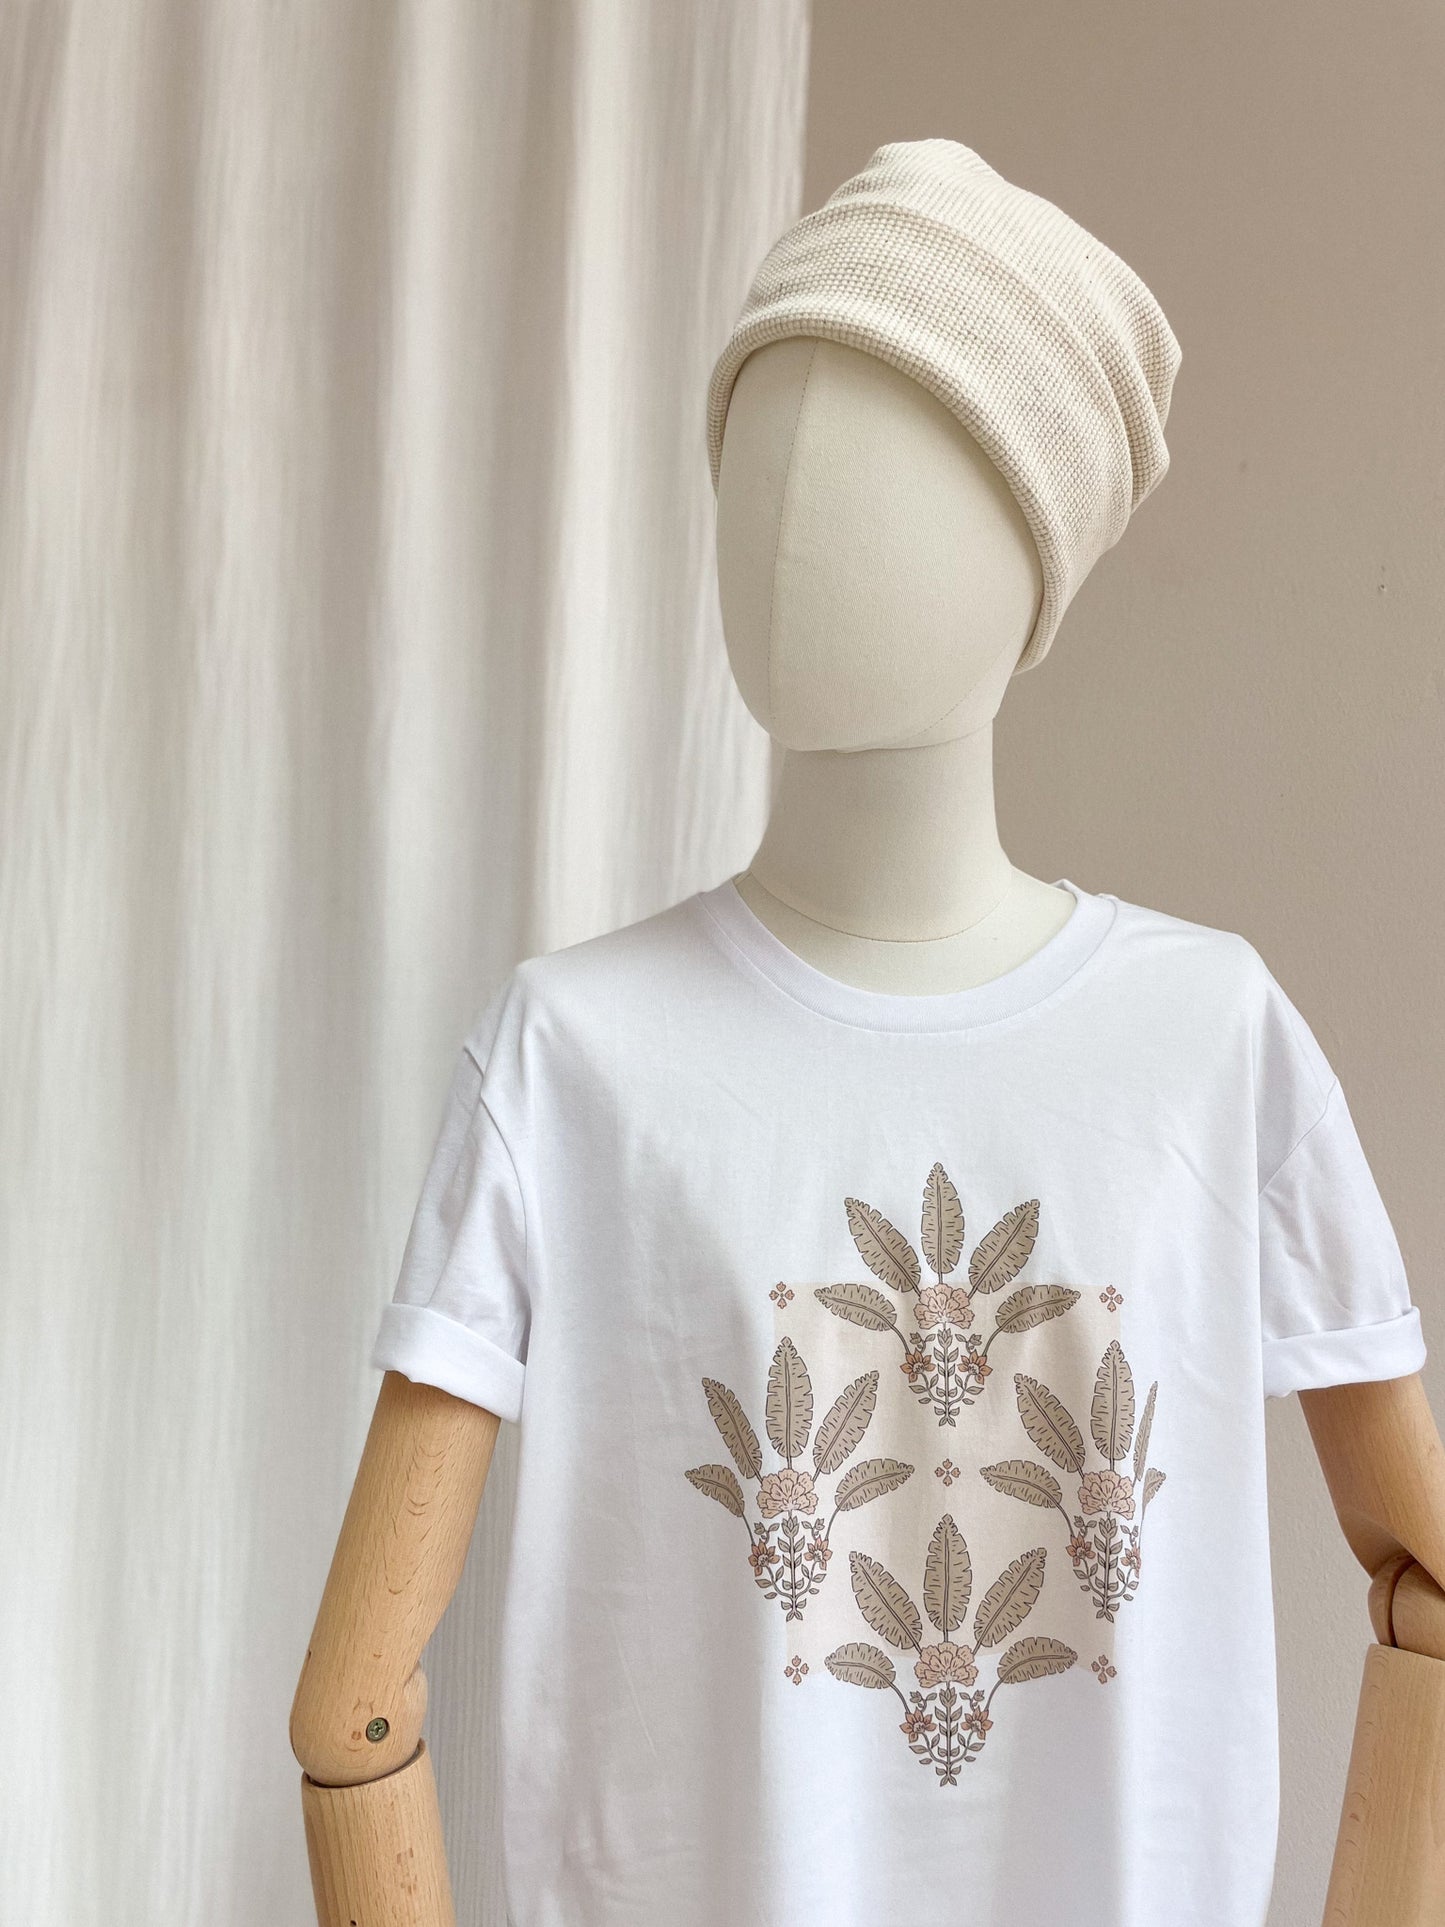 T-shirt dress / Girly palms / white